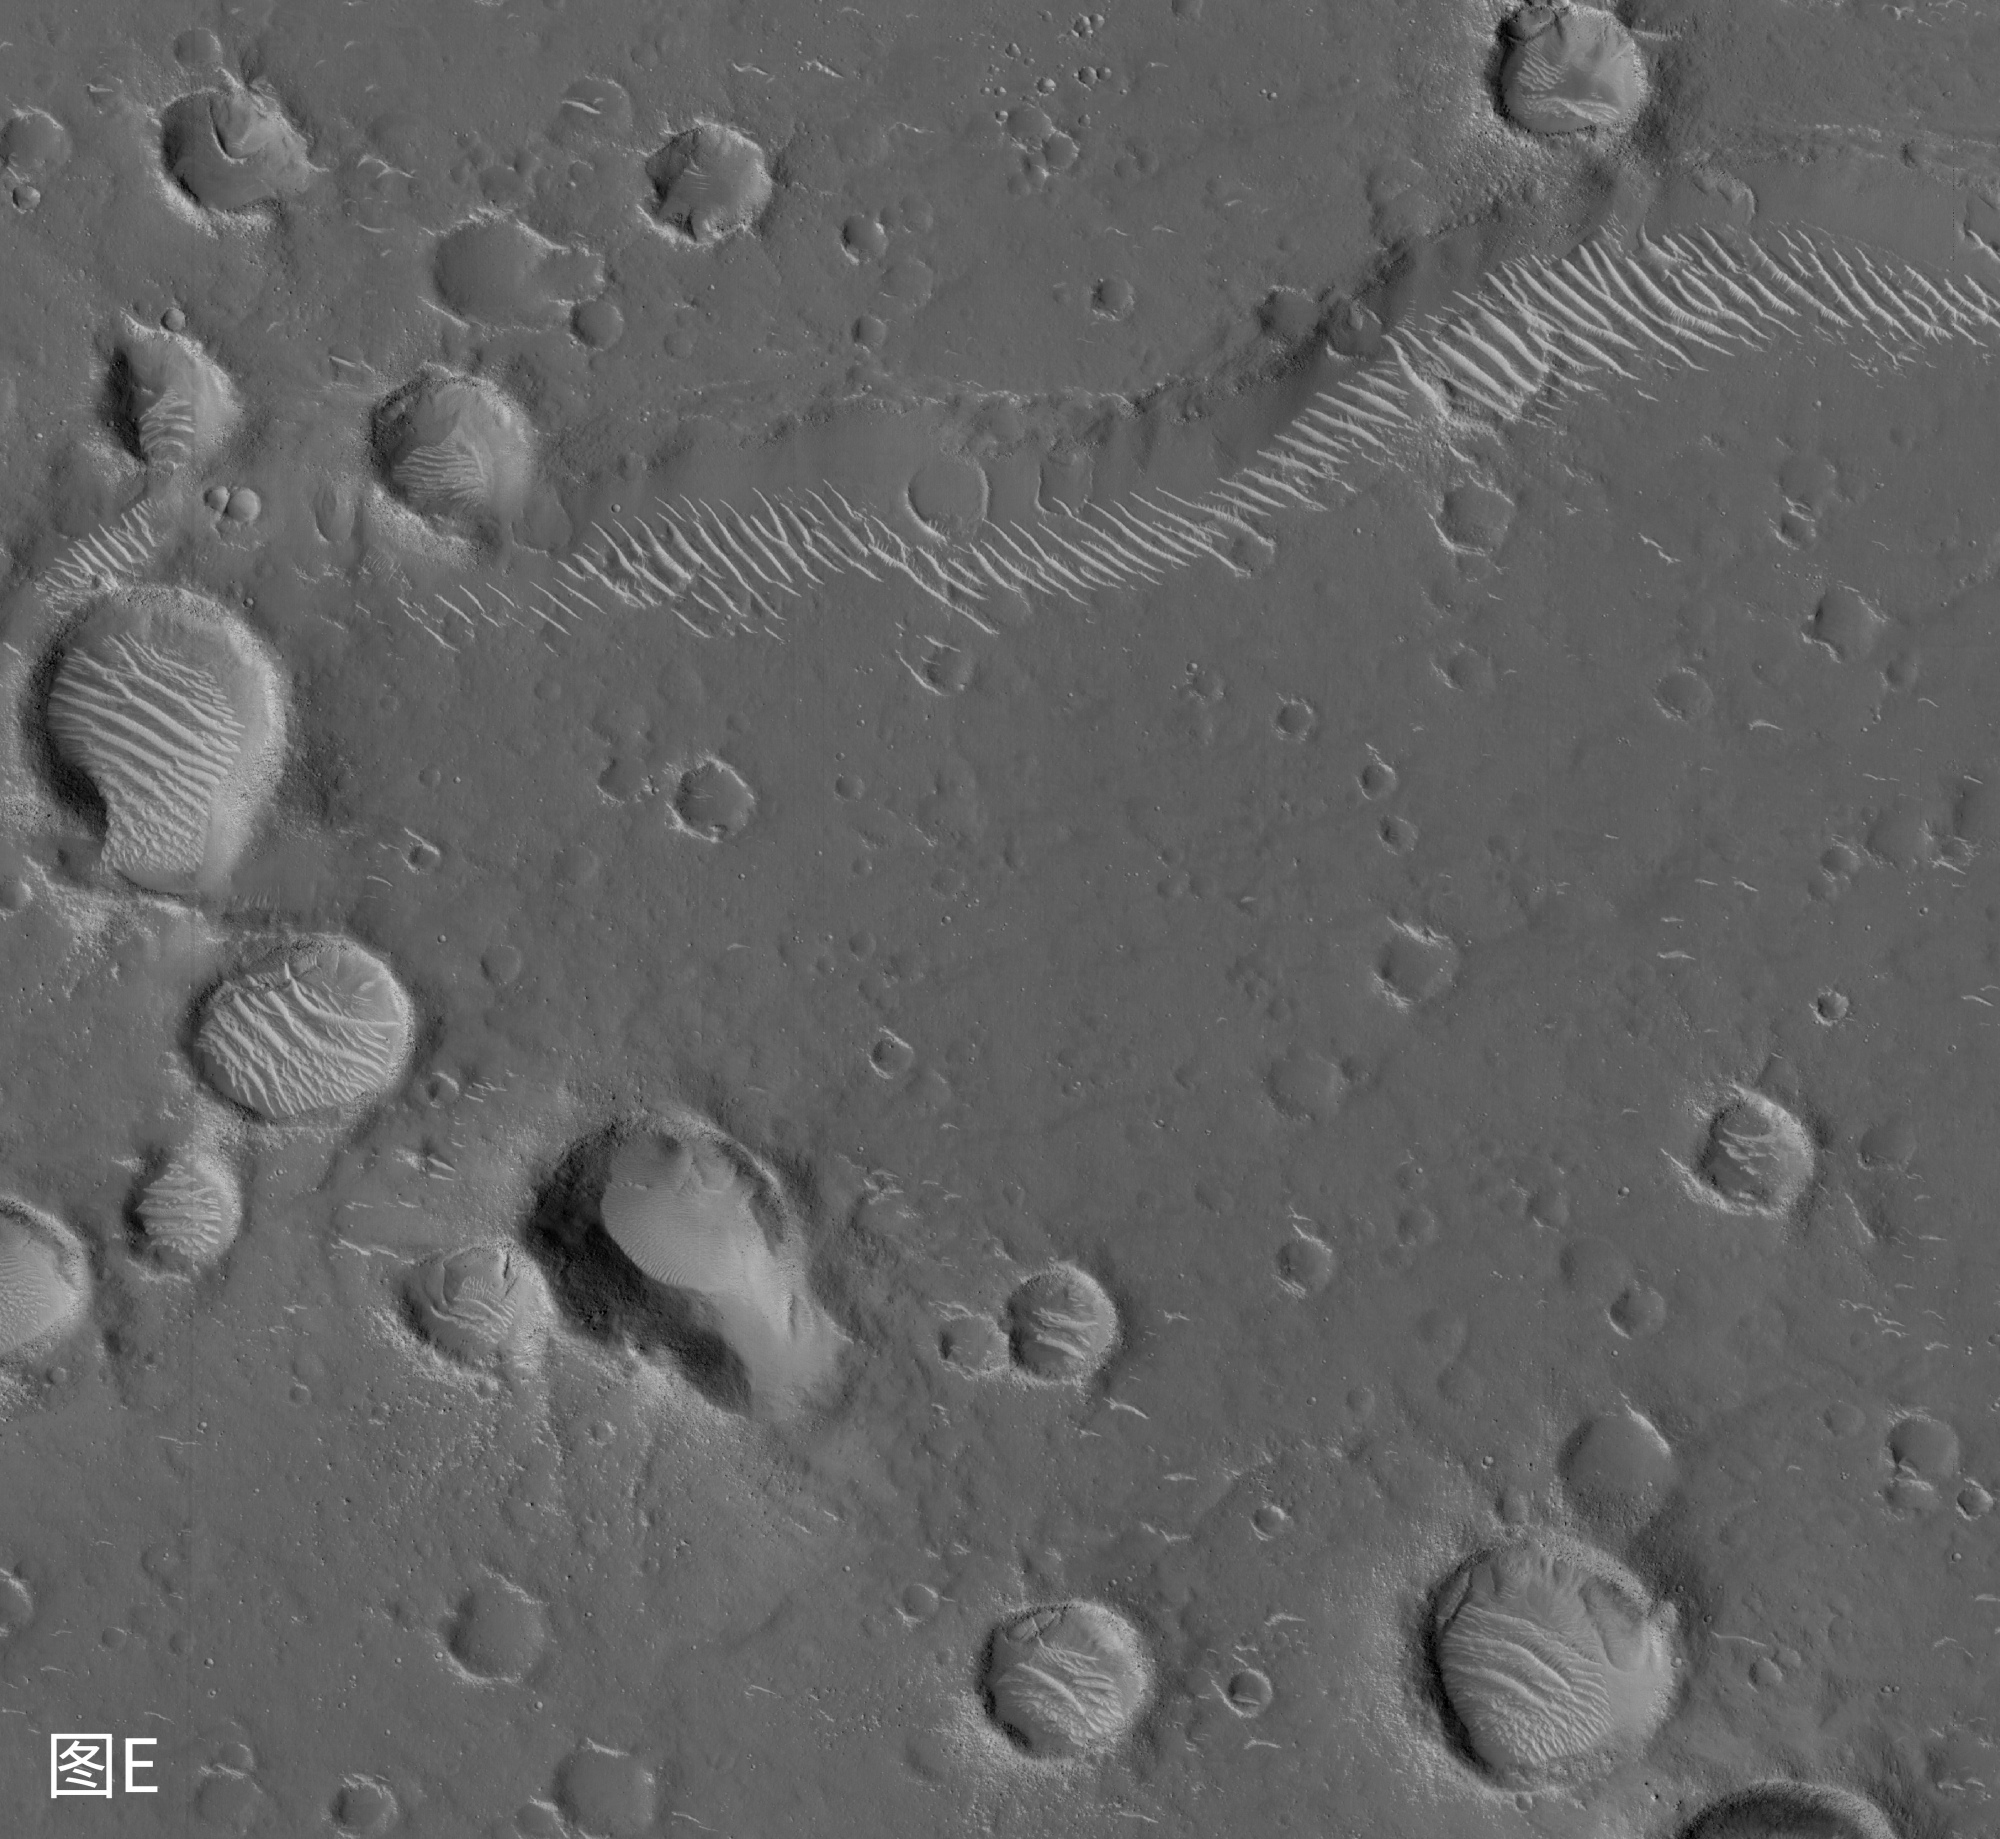 15_Tianwen-1-orbiter_HiRIC_Utopia-Planitia_landing-site-S_box-E.thumb.jpg.7277b42c8c11420a470d36d14cd2e9f6.jpg